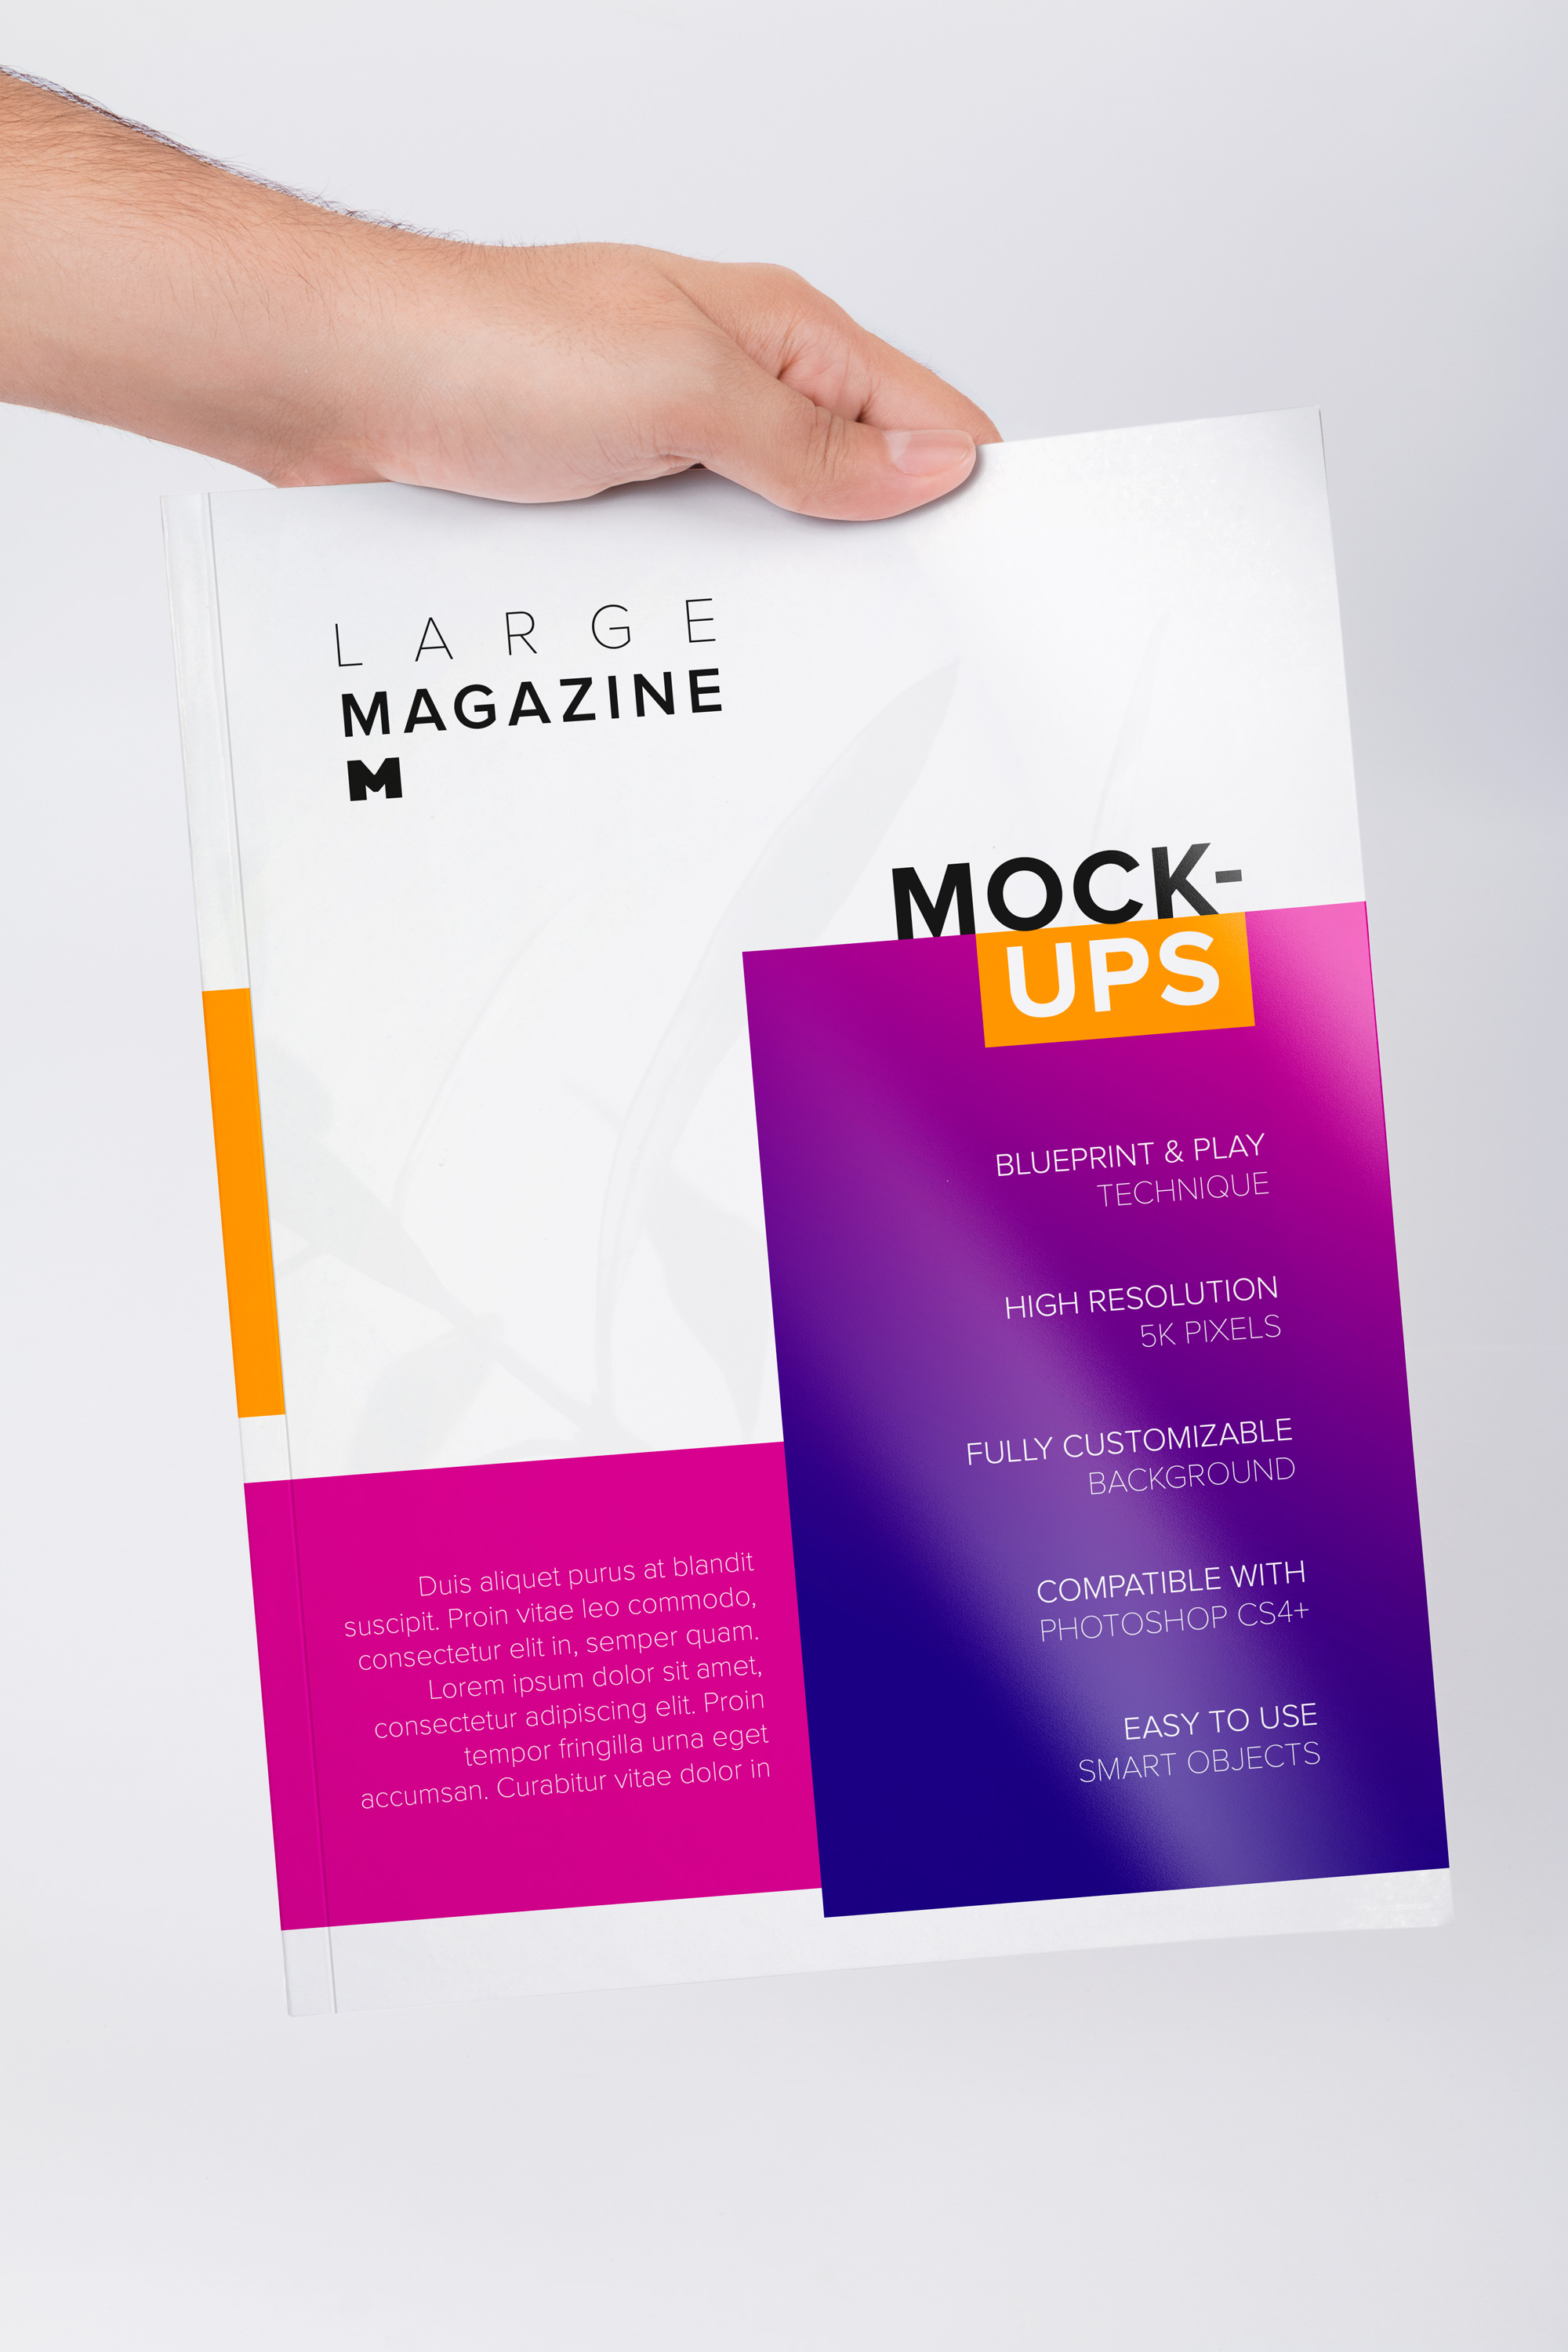 大型杂志封面设计效果图样机04 Large Magazine Cover Mockup 04插图1